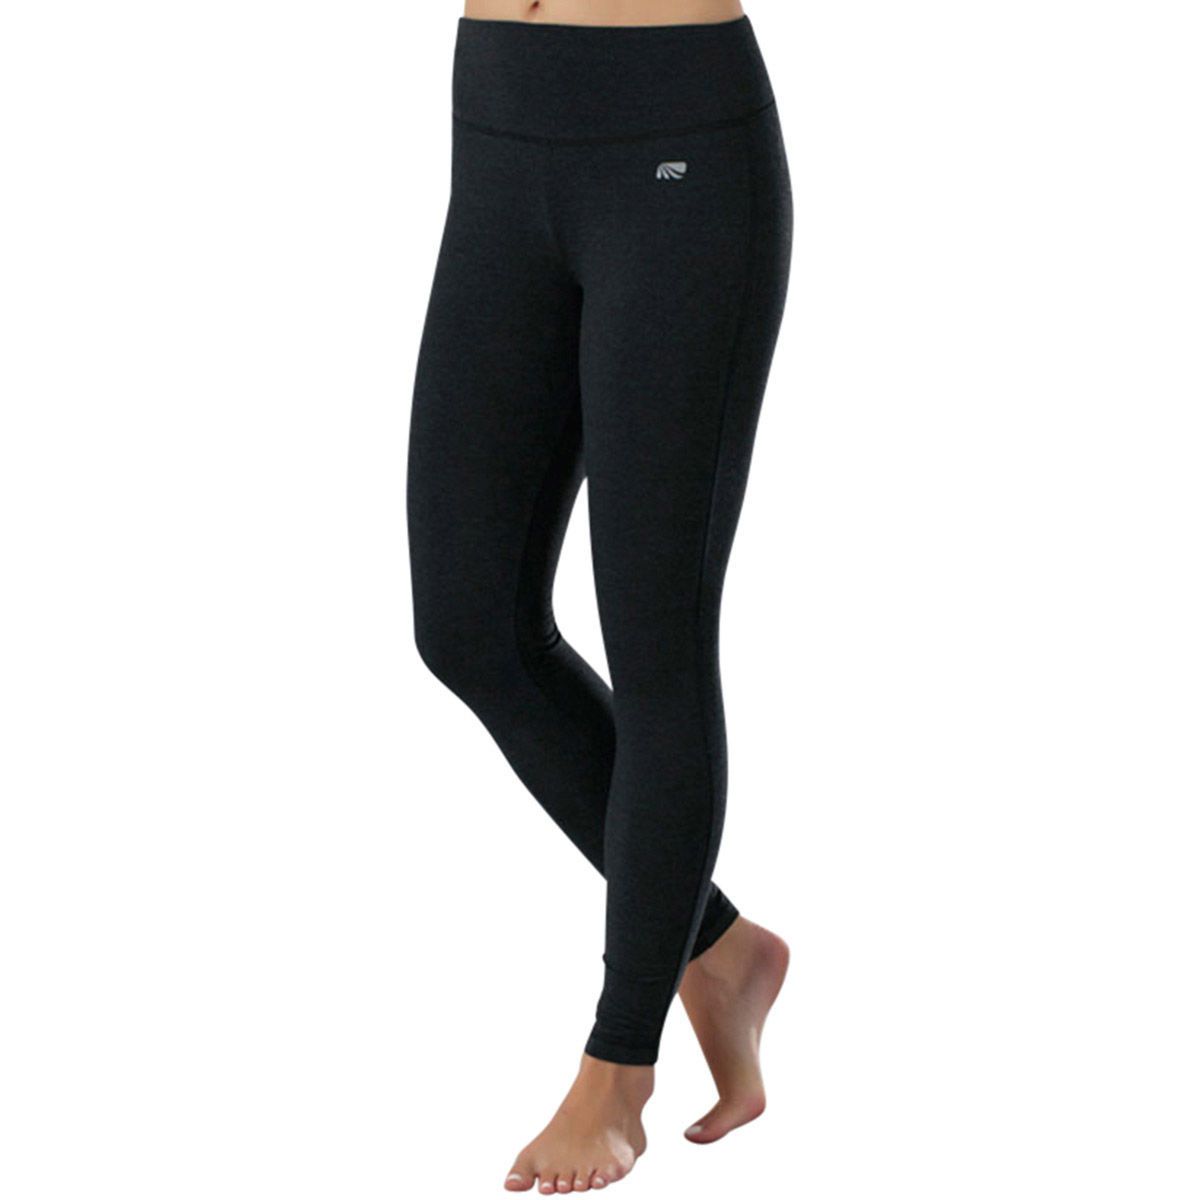 MARIKA / HEALTH & FITNESS Bally Total Fitness KAYLA - Leggings - Women's -  black abstract - Private Sport Shop